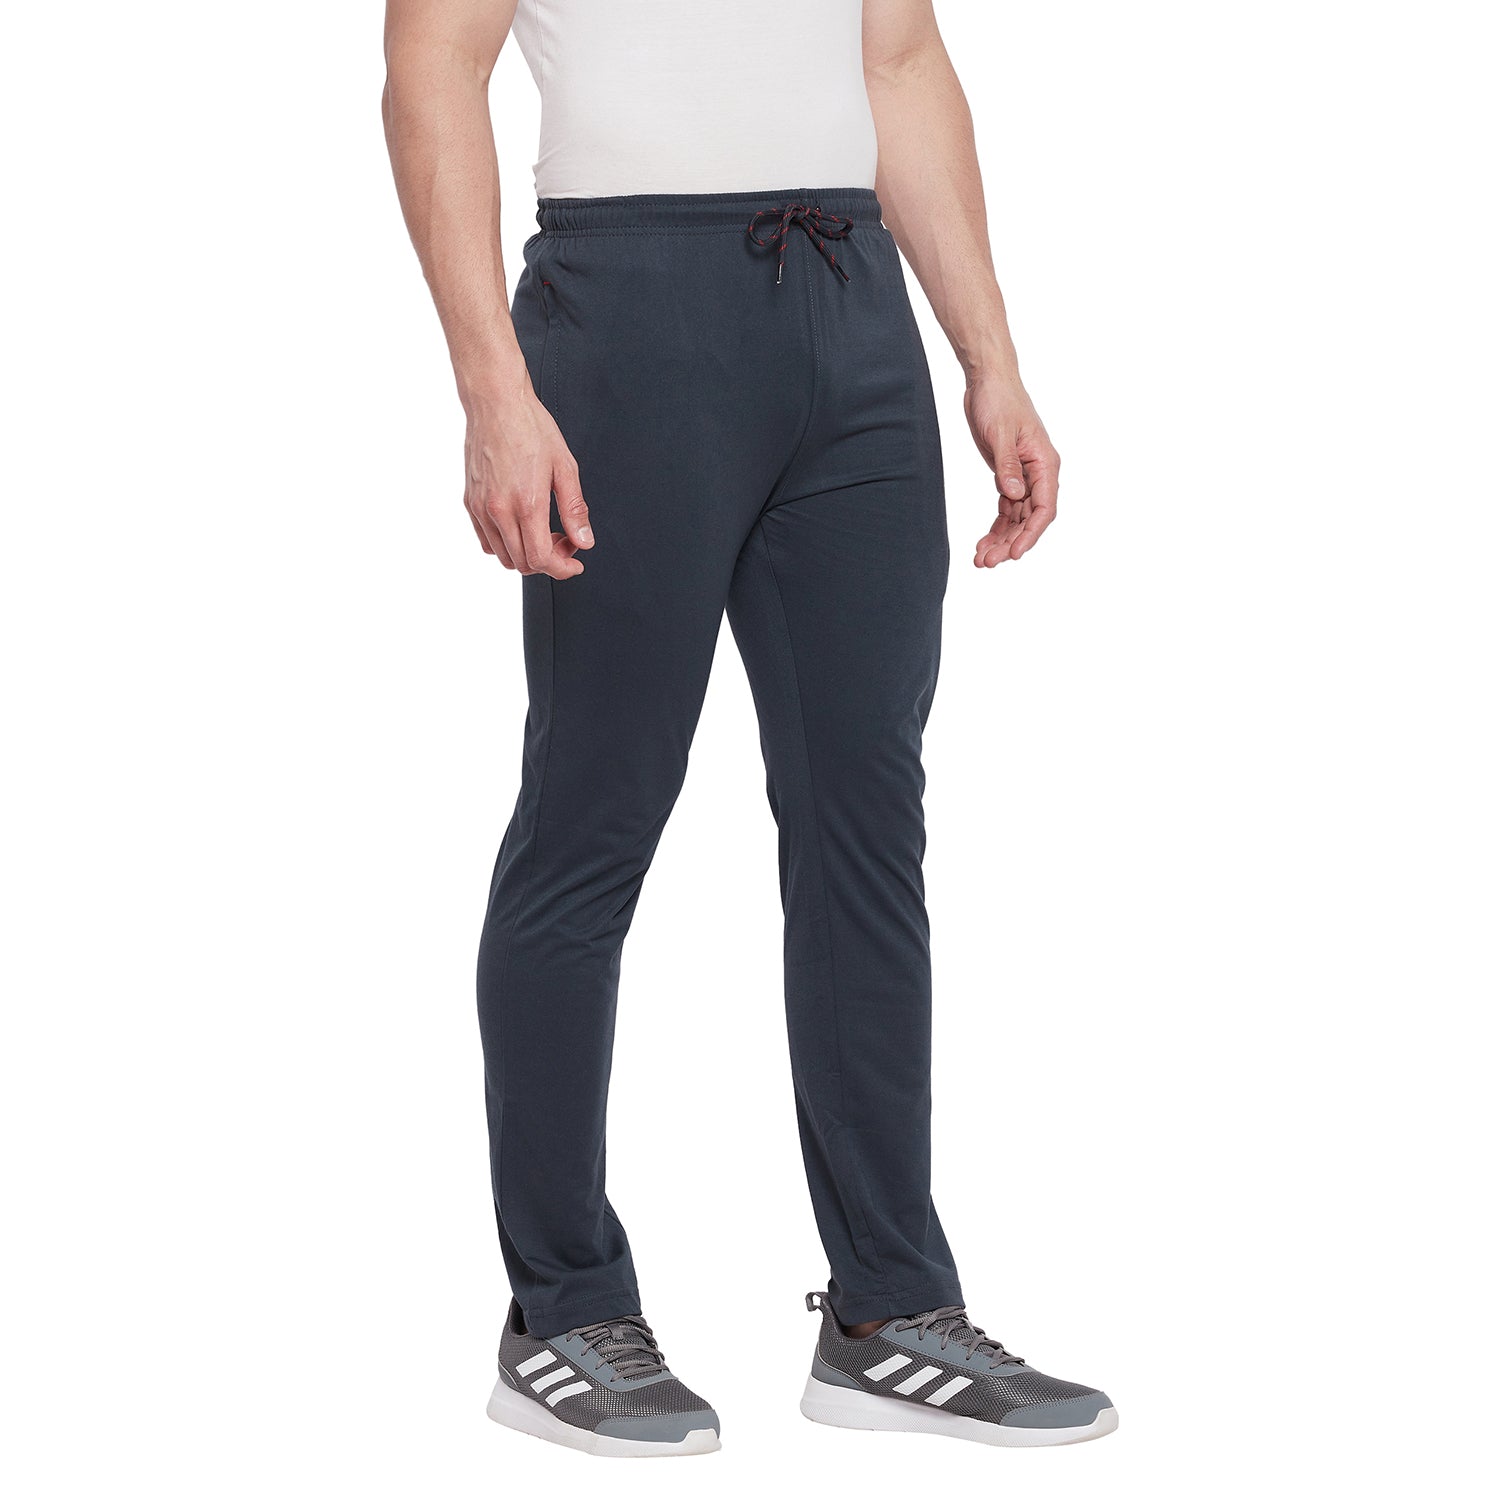 Neva Men Kc Sinker Fabric Trackpant with One Side Zip Pocket- Dark Grey